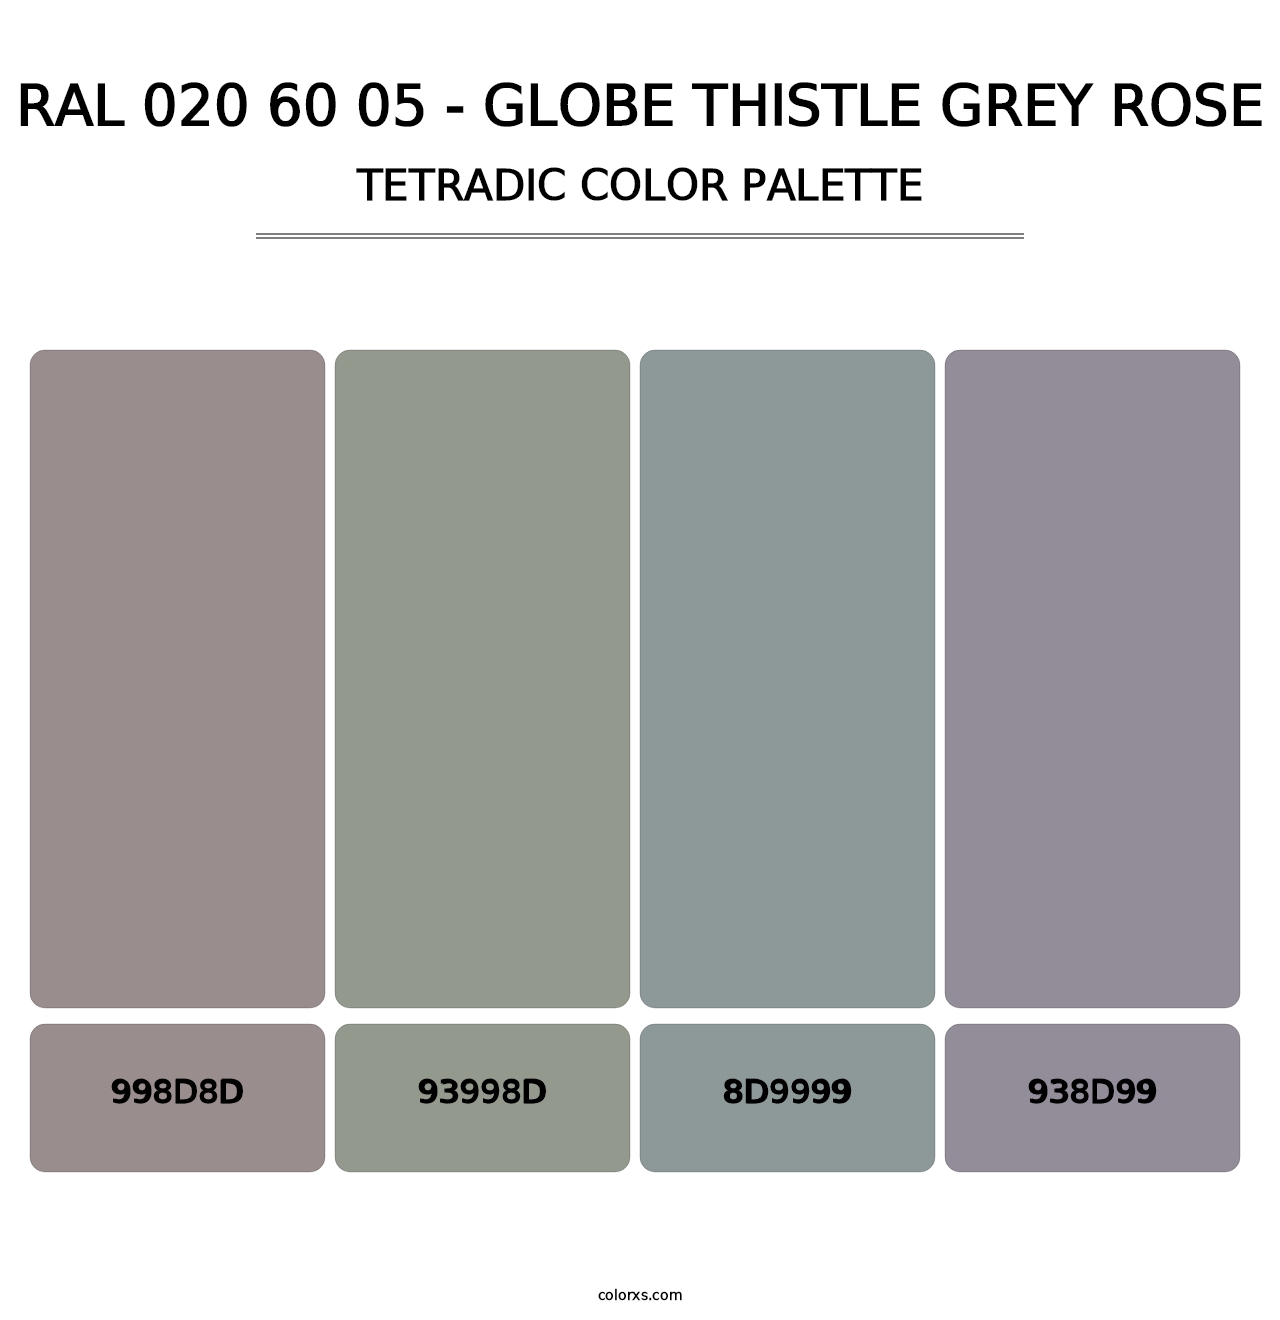 RAL 020 60 05 - Globe Thistle Grey Rose - Tetradic Color Palette